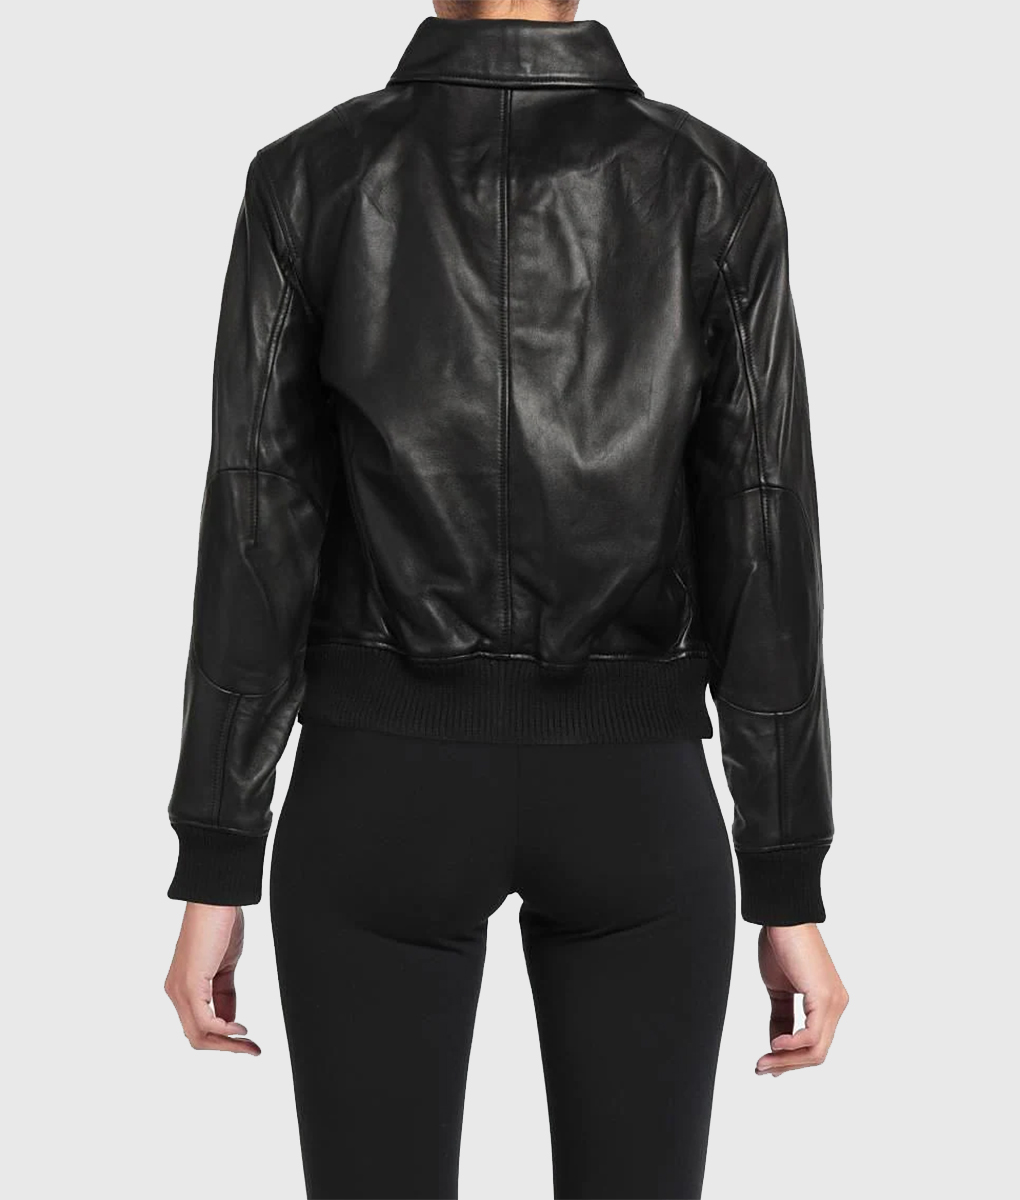 Jennifer Connelly Dark Matter Leather Jacket (3)